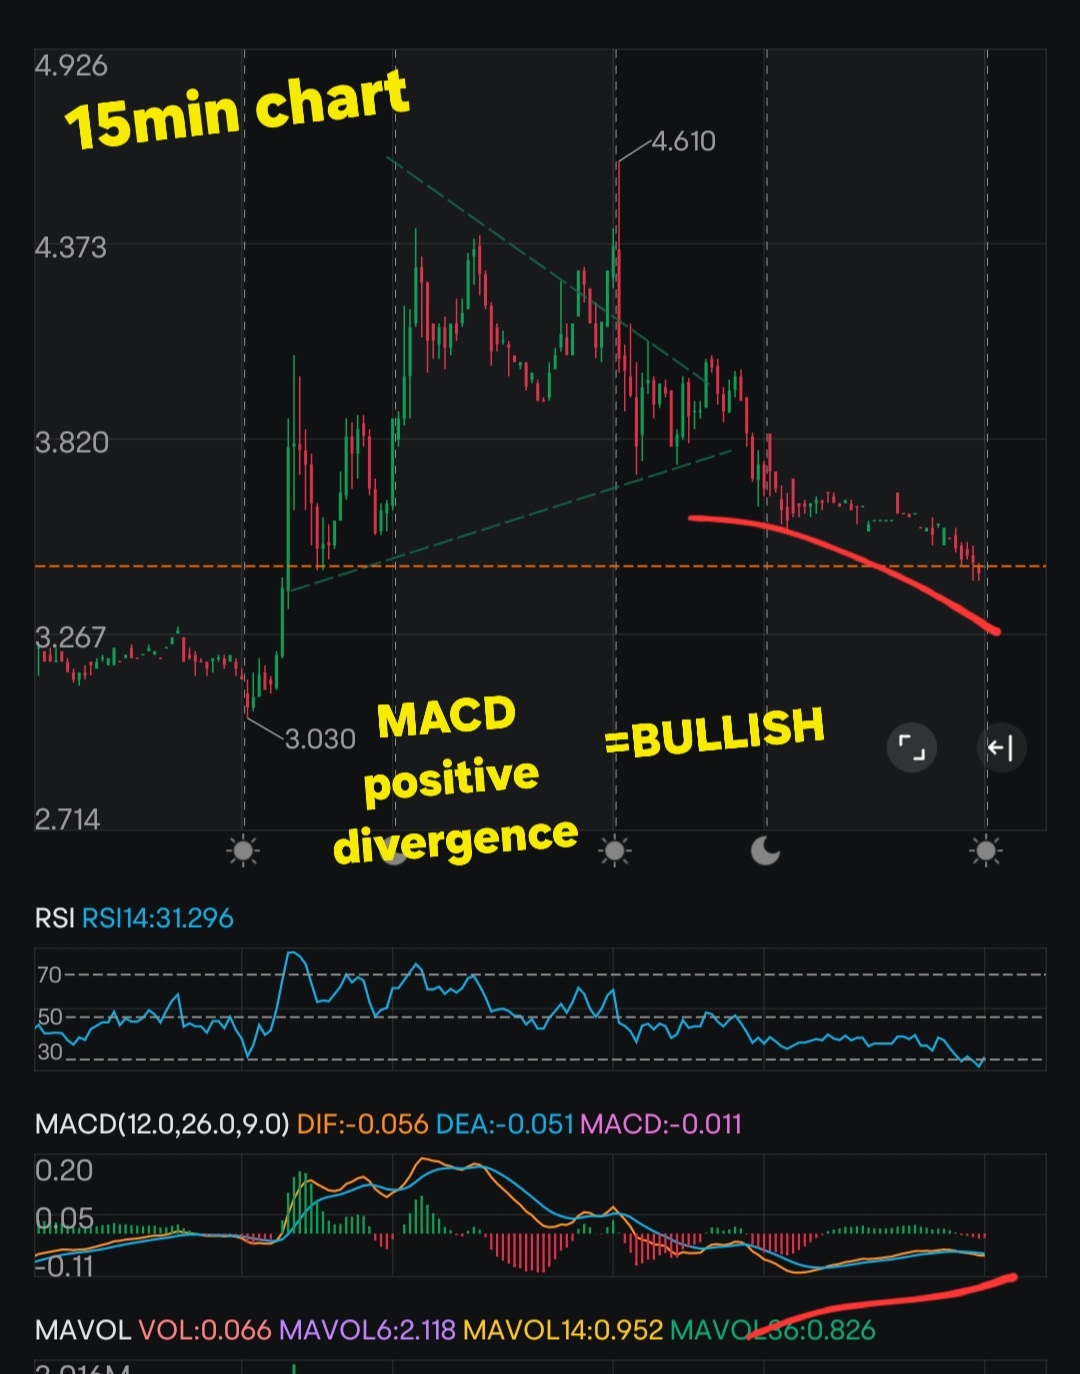 BULLISH MACD positive divergence on 15min chart